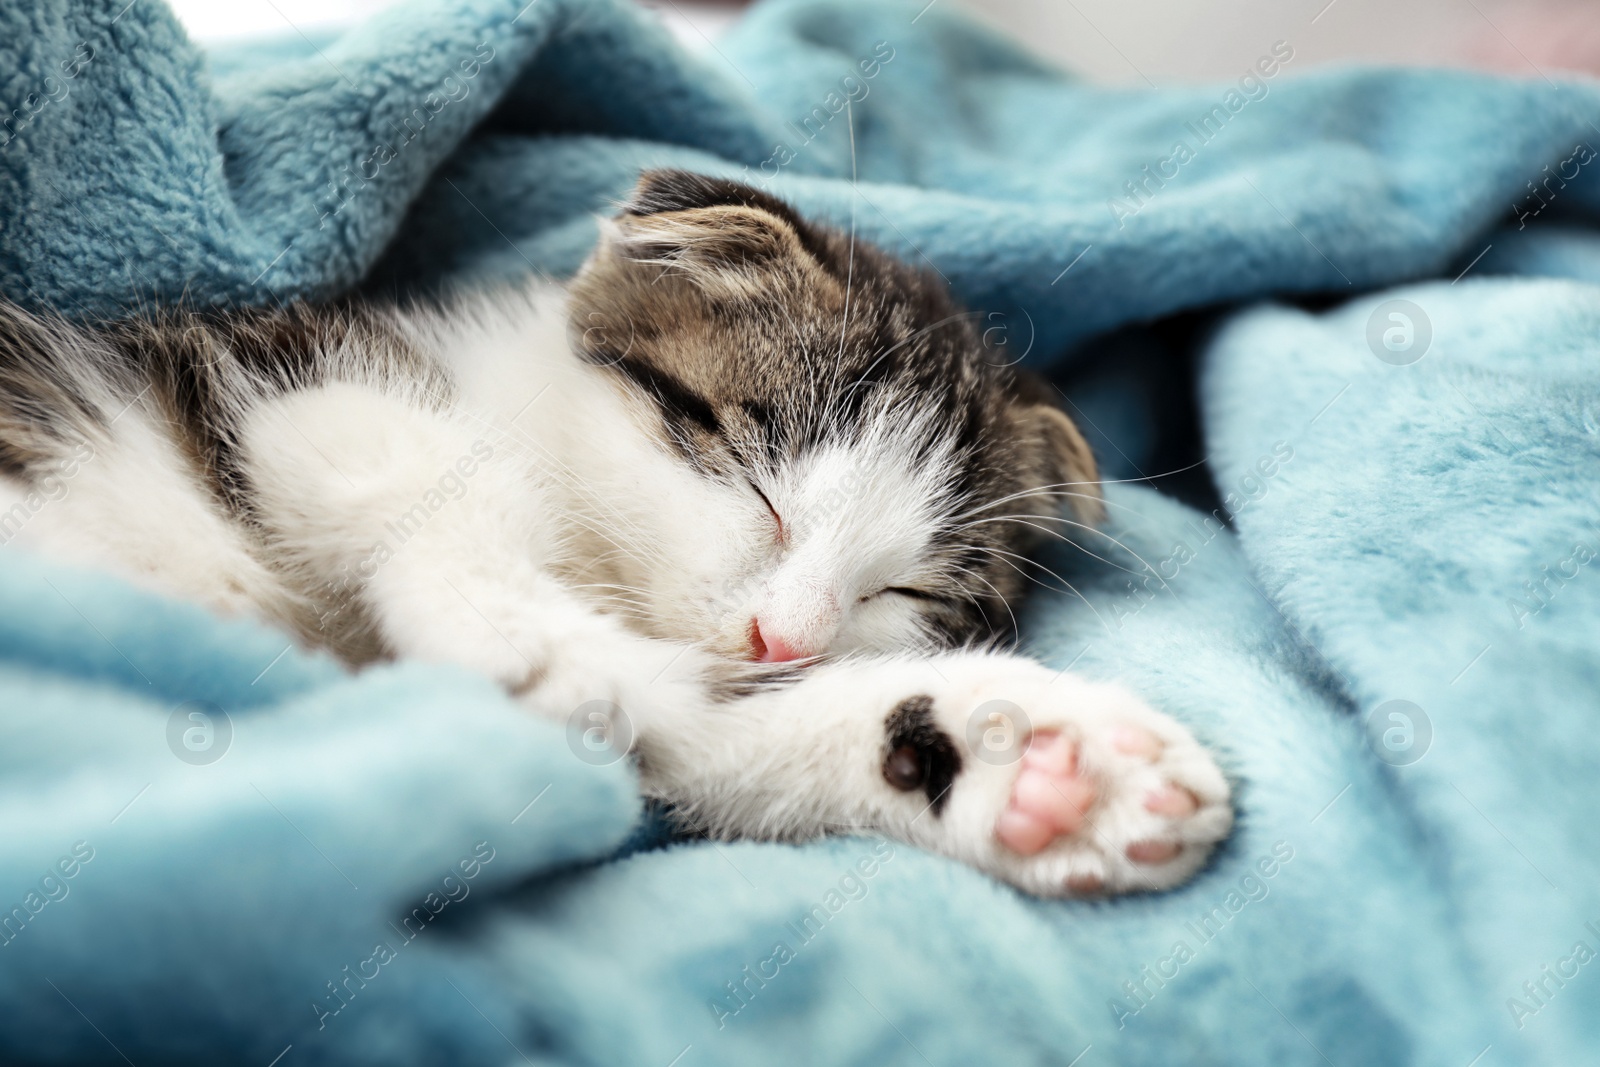 Photo of Adorable little kitten sleeping on soft plaid